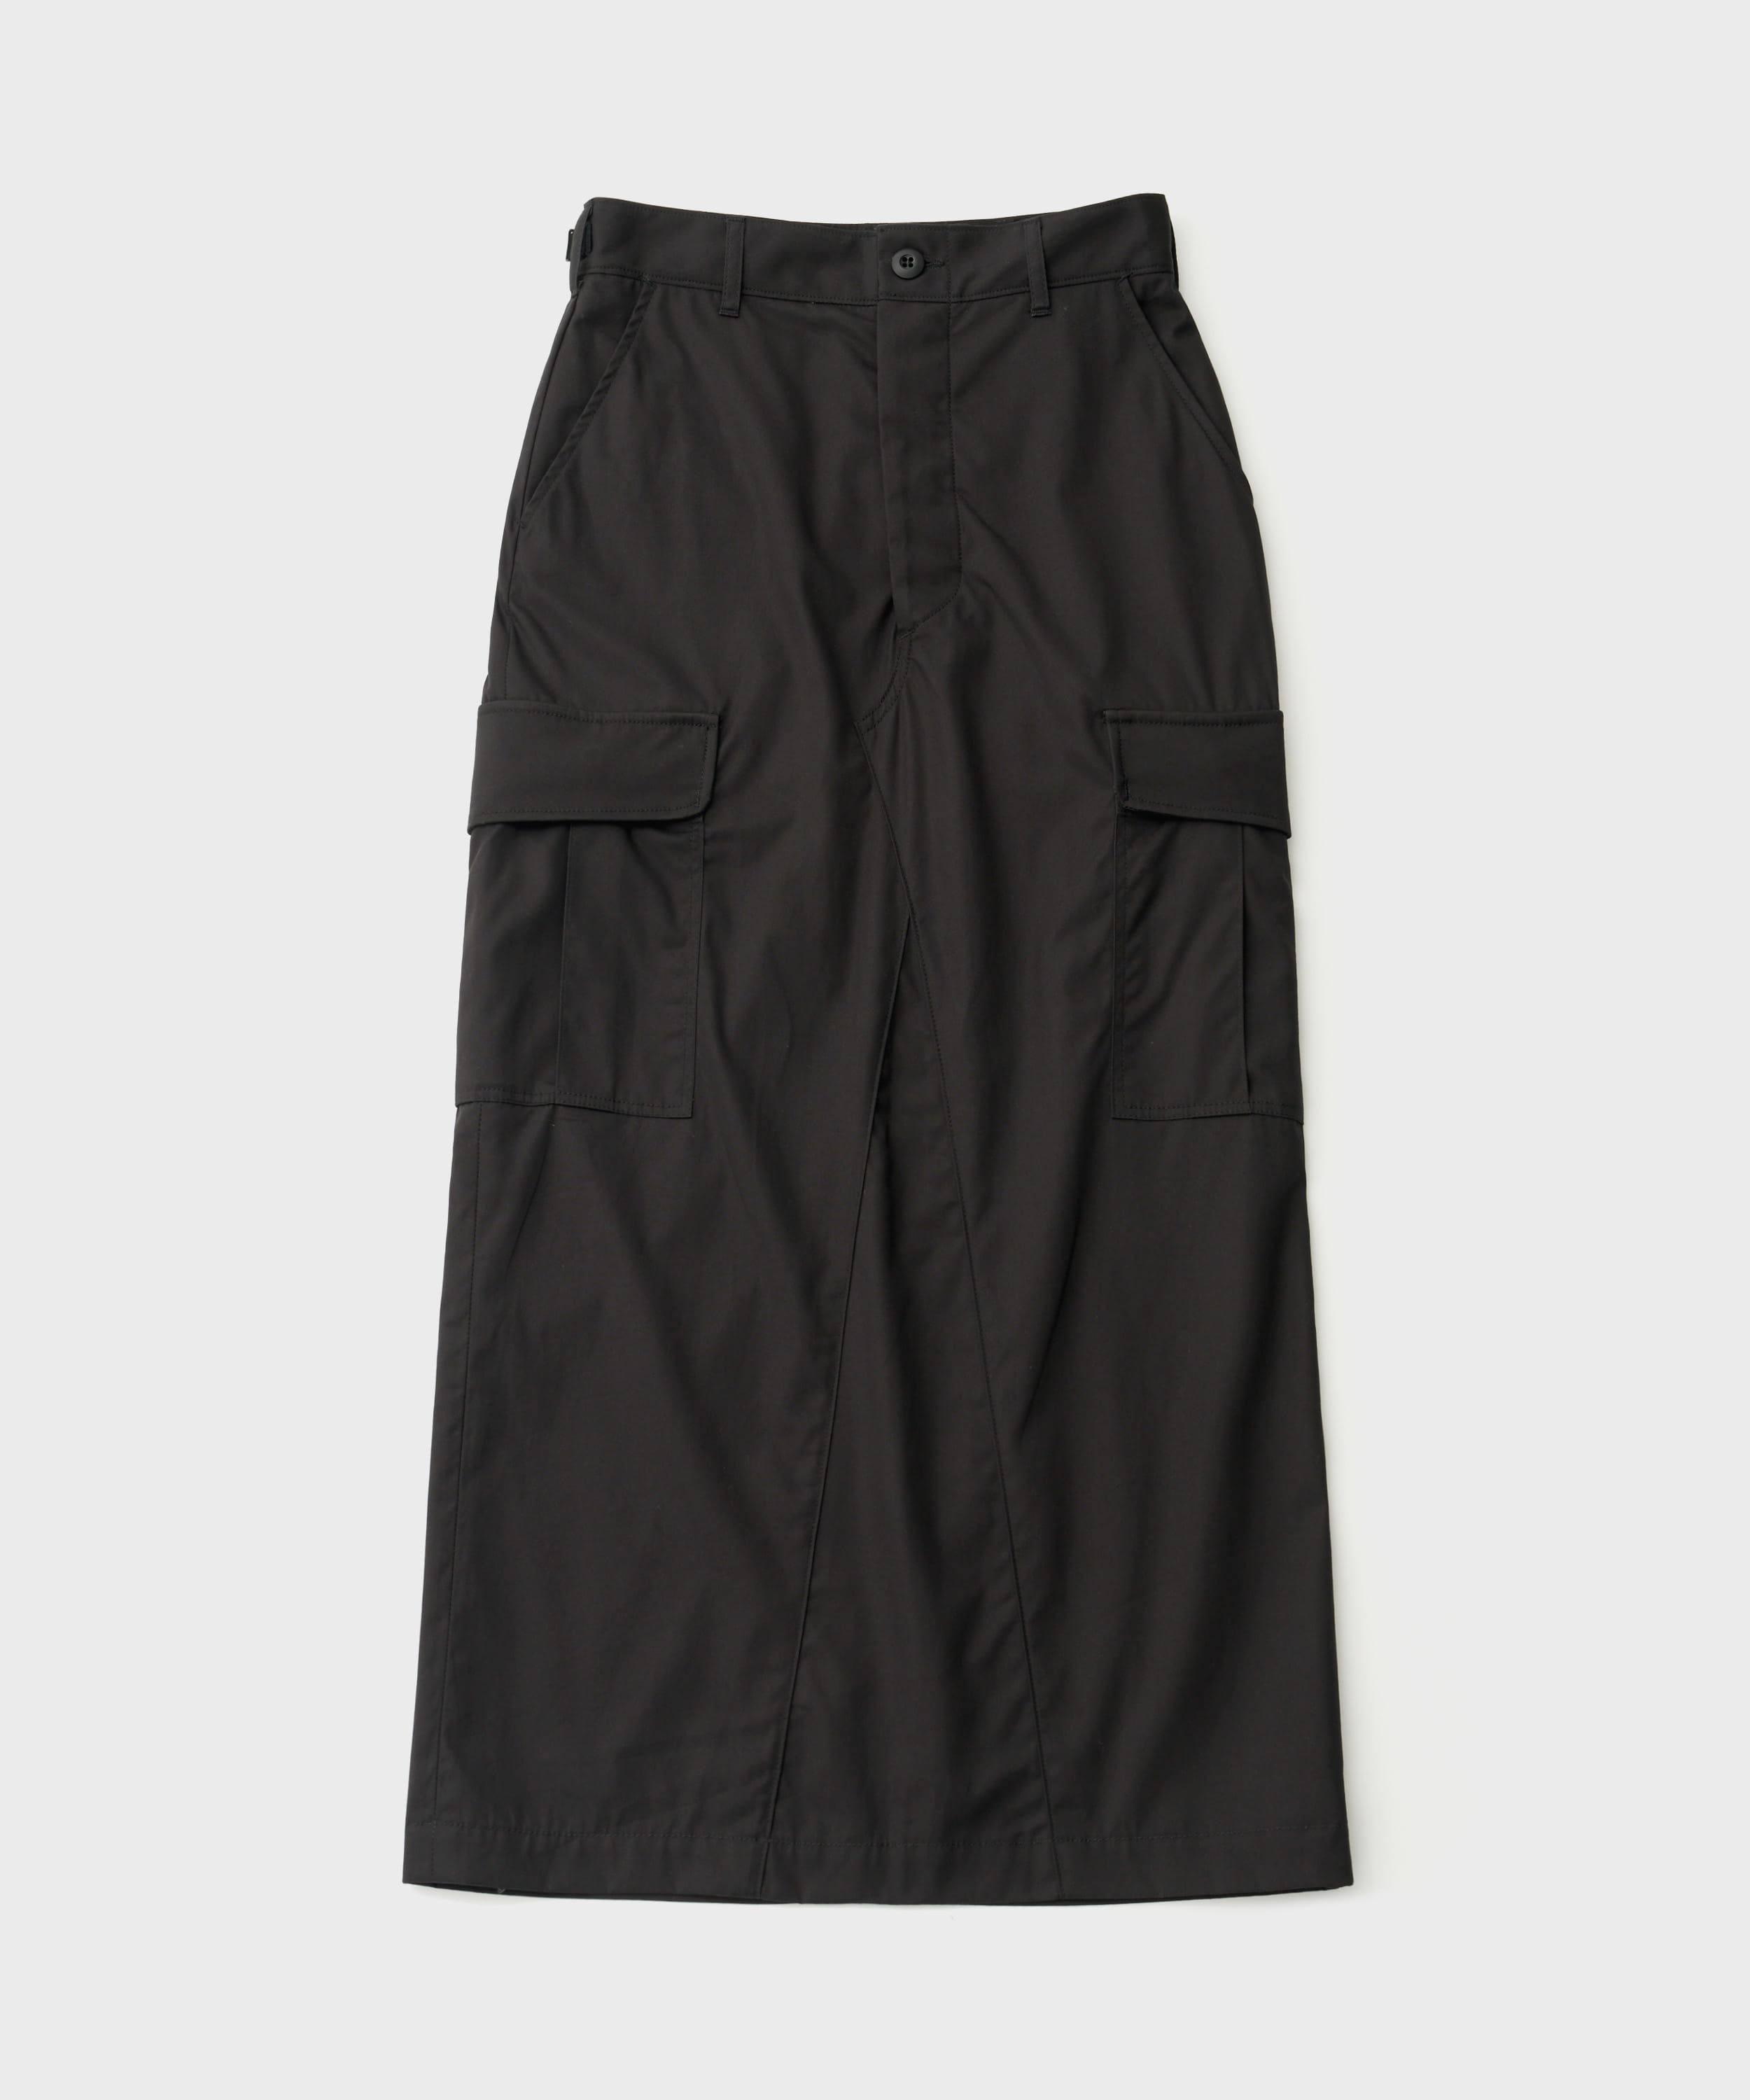 Jungle Fatigue Skirt (Black)